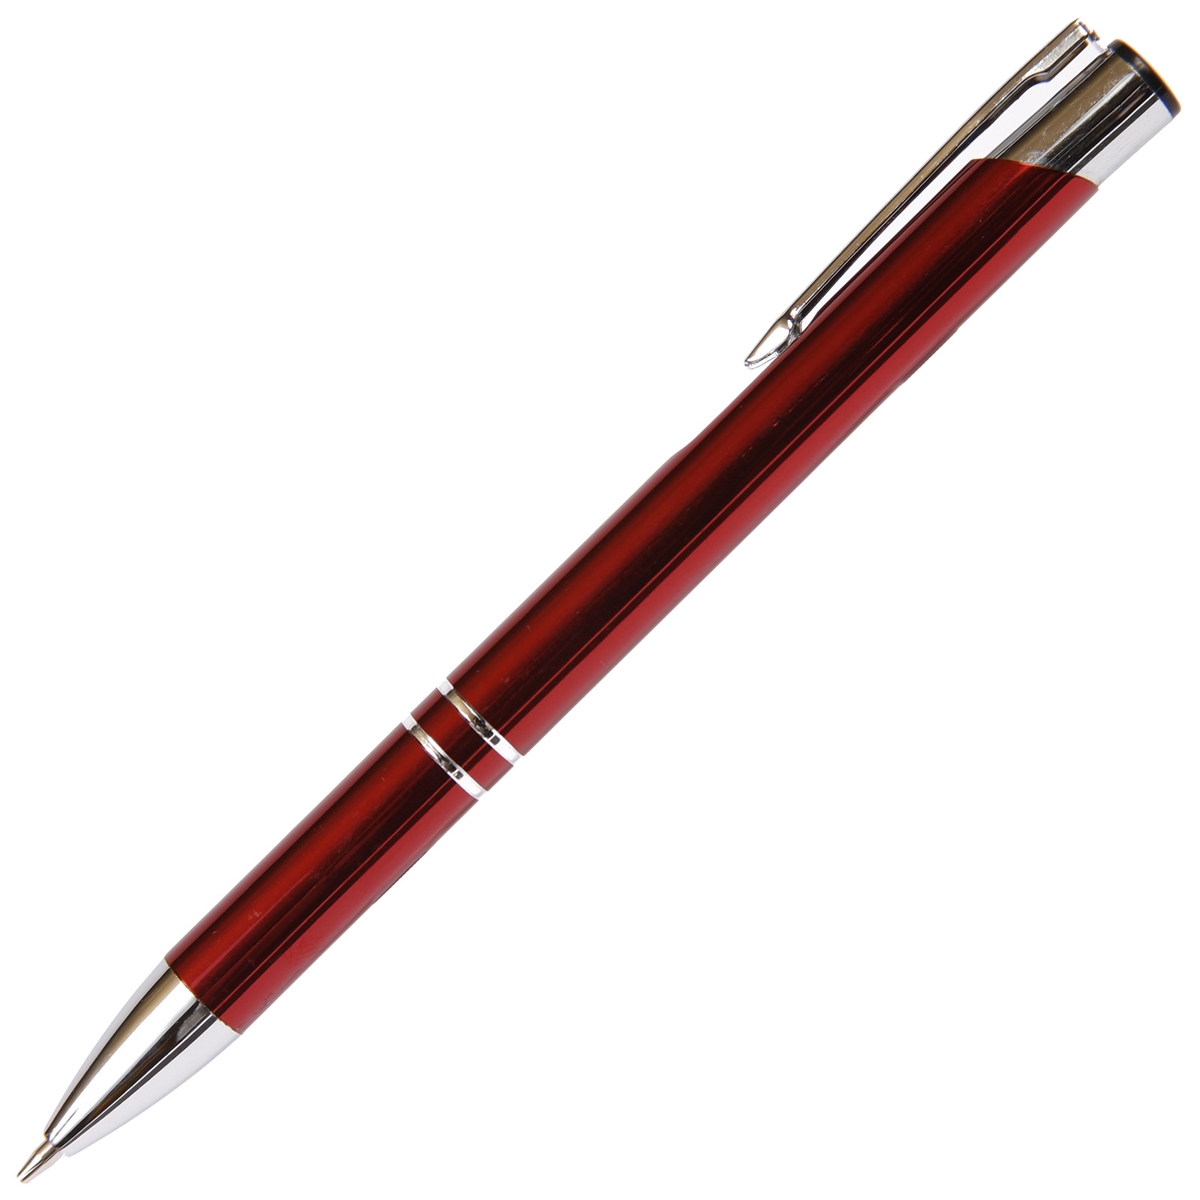 B201 - Red Pencil